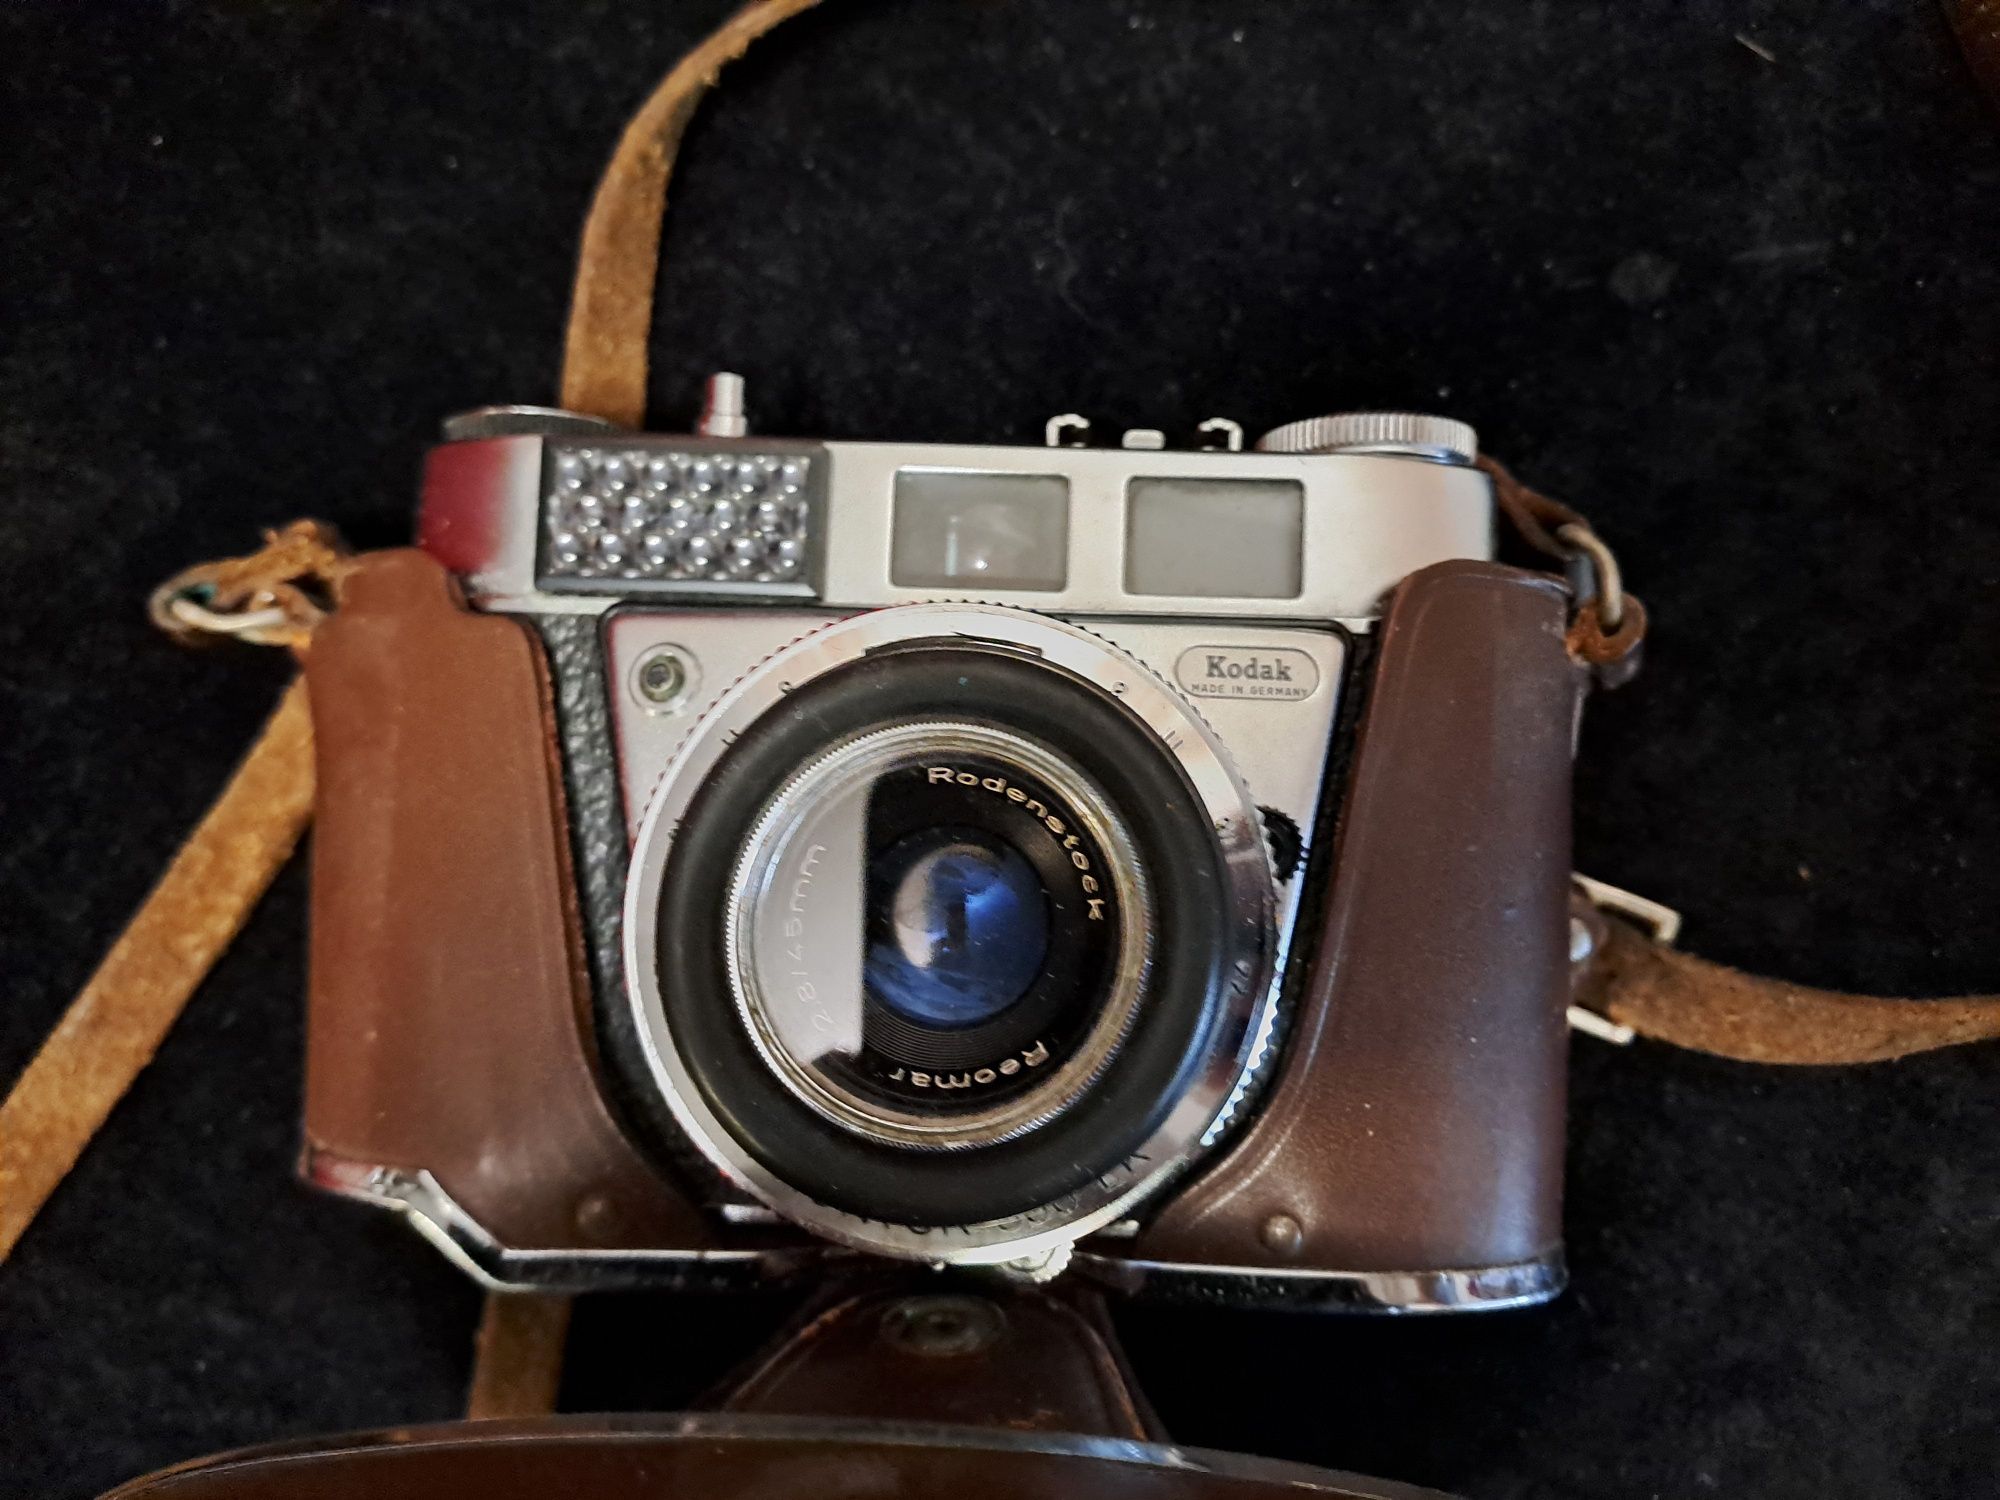 Kodak Rodenstock Roemar 1:2,8 45mm